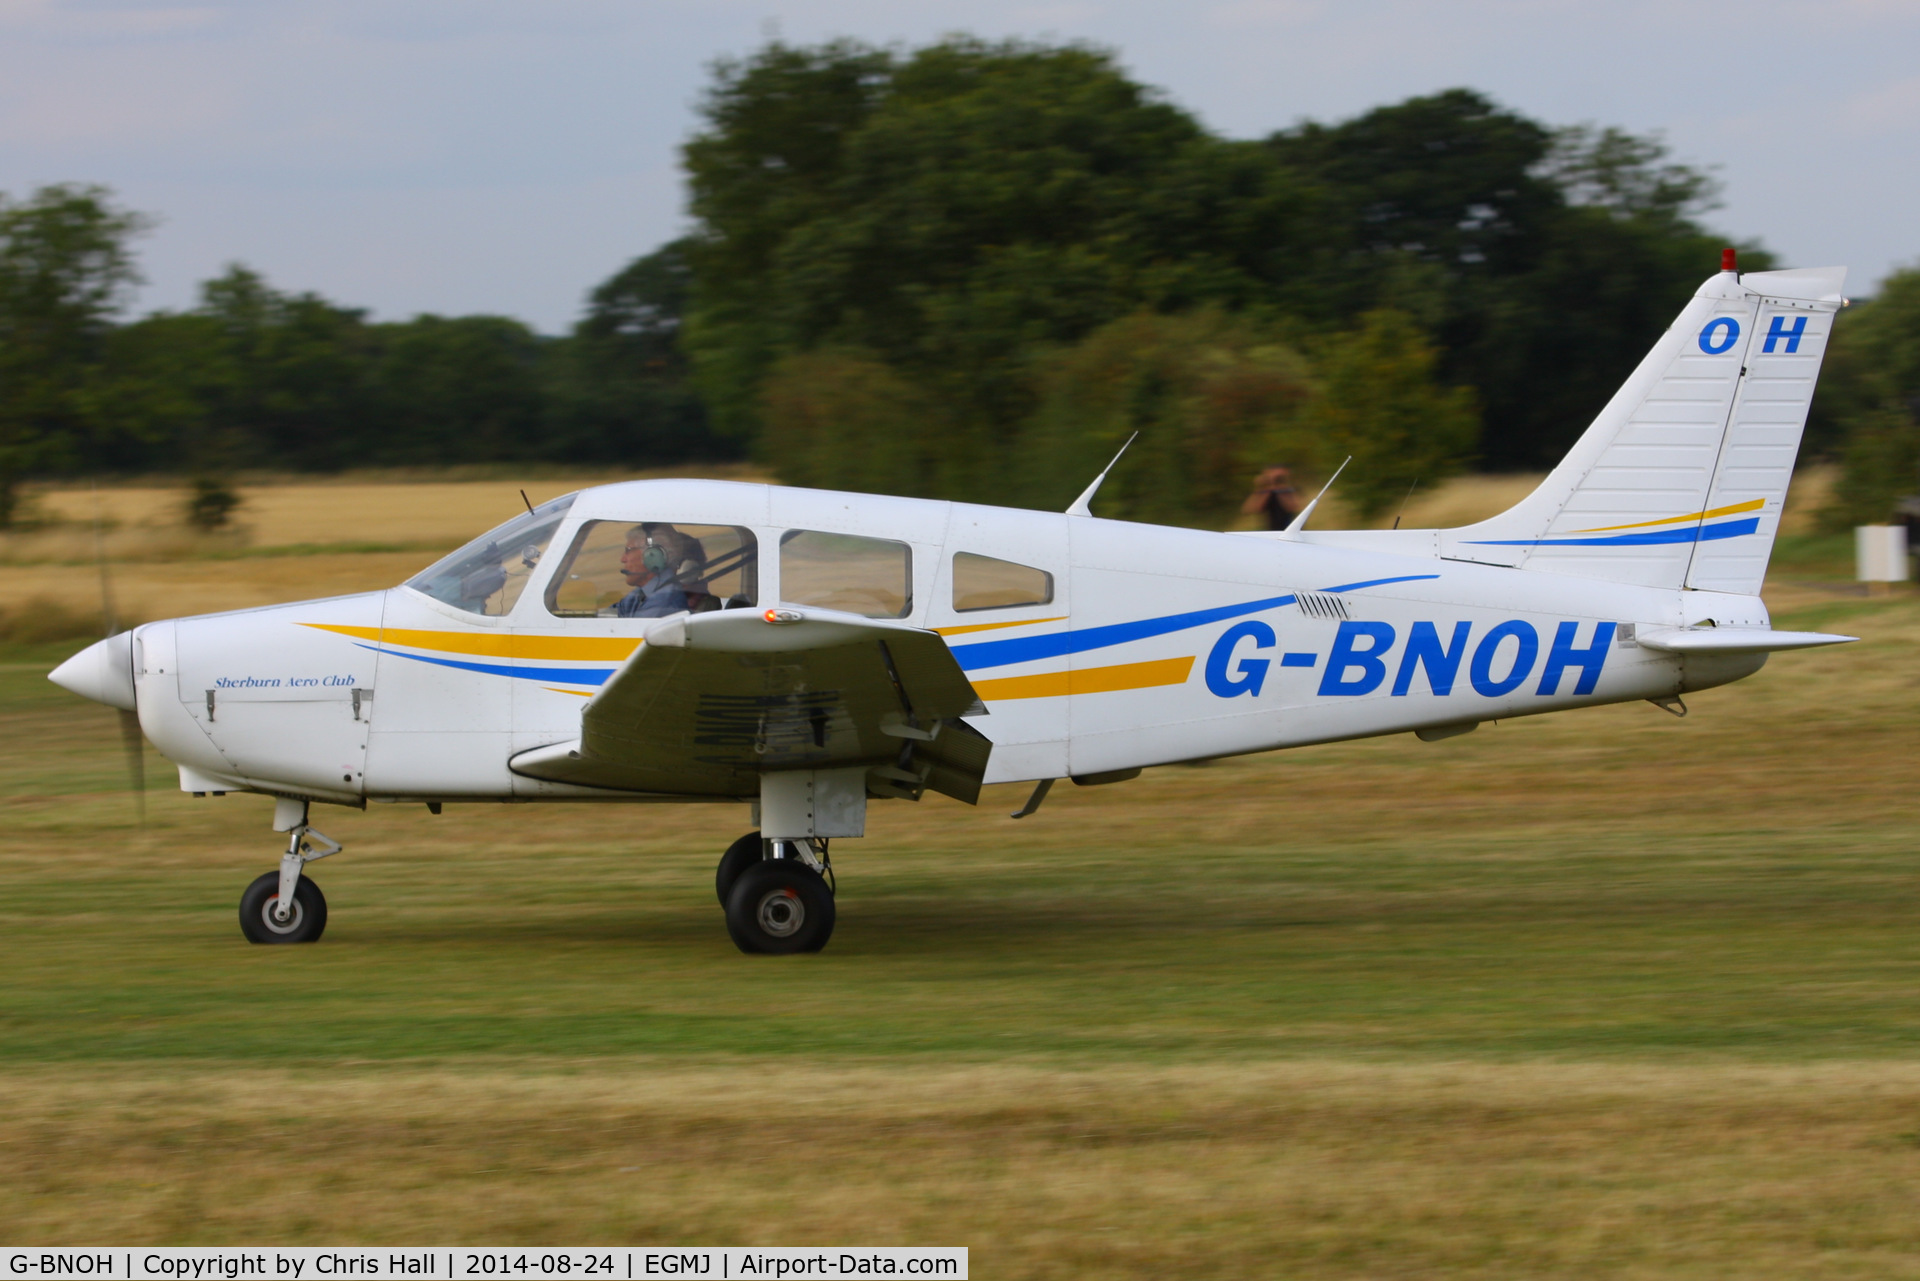 G-BNOH, 1987 Piper PA-28-161 Cherokee Warrior II C/N 2816016, at the Little Gransden Airshow 2014